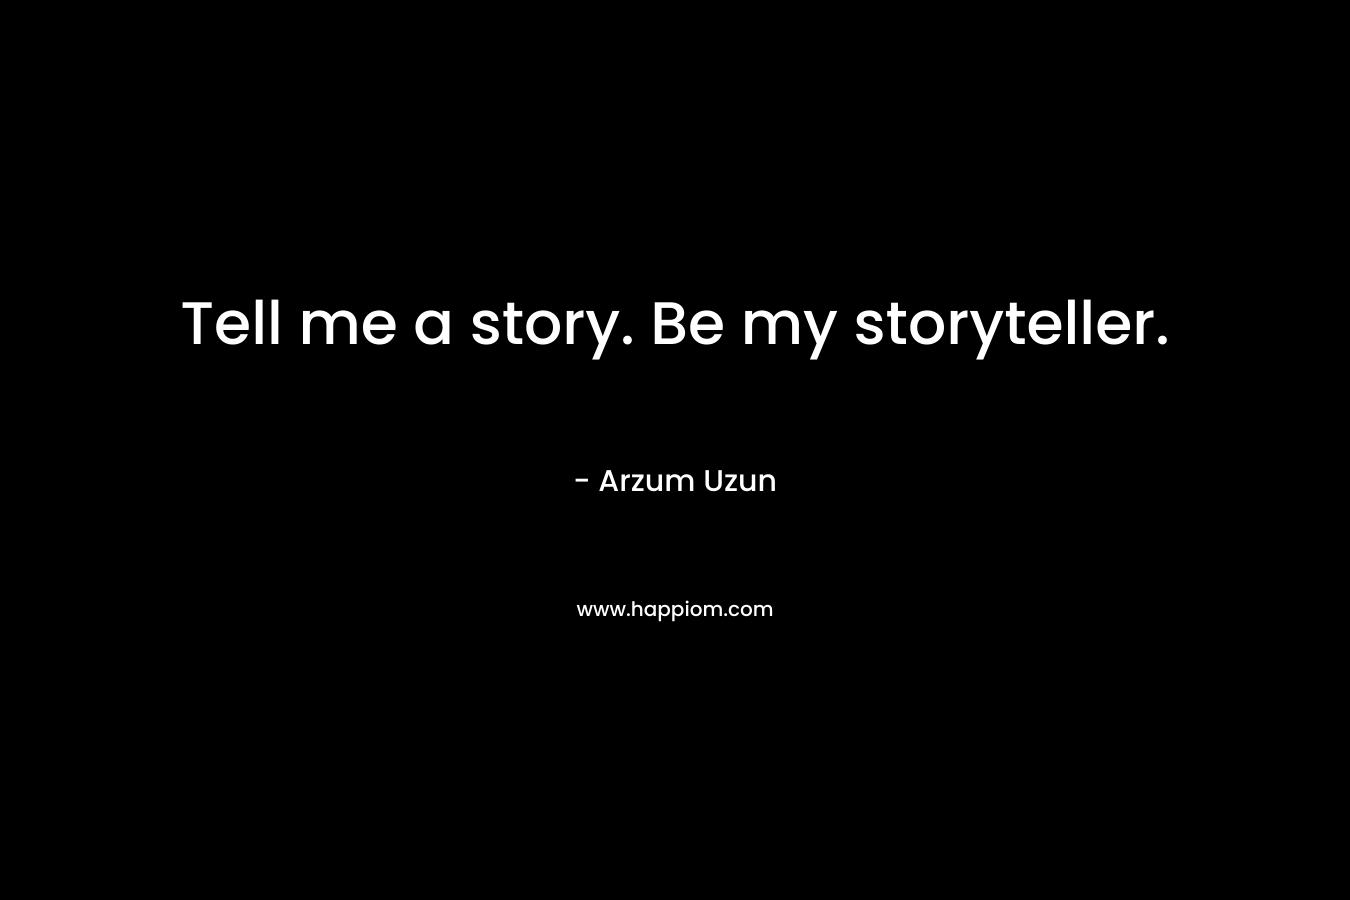 Tell me a story. Be my storyteller.